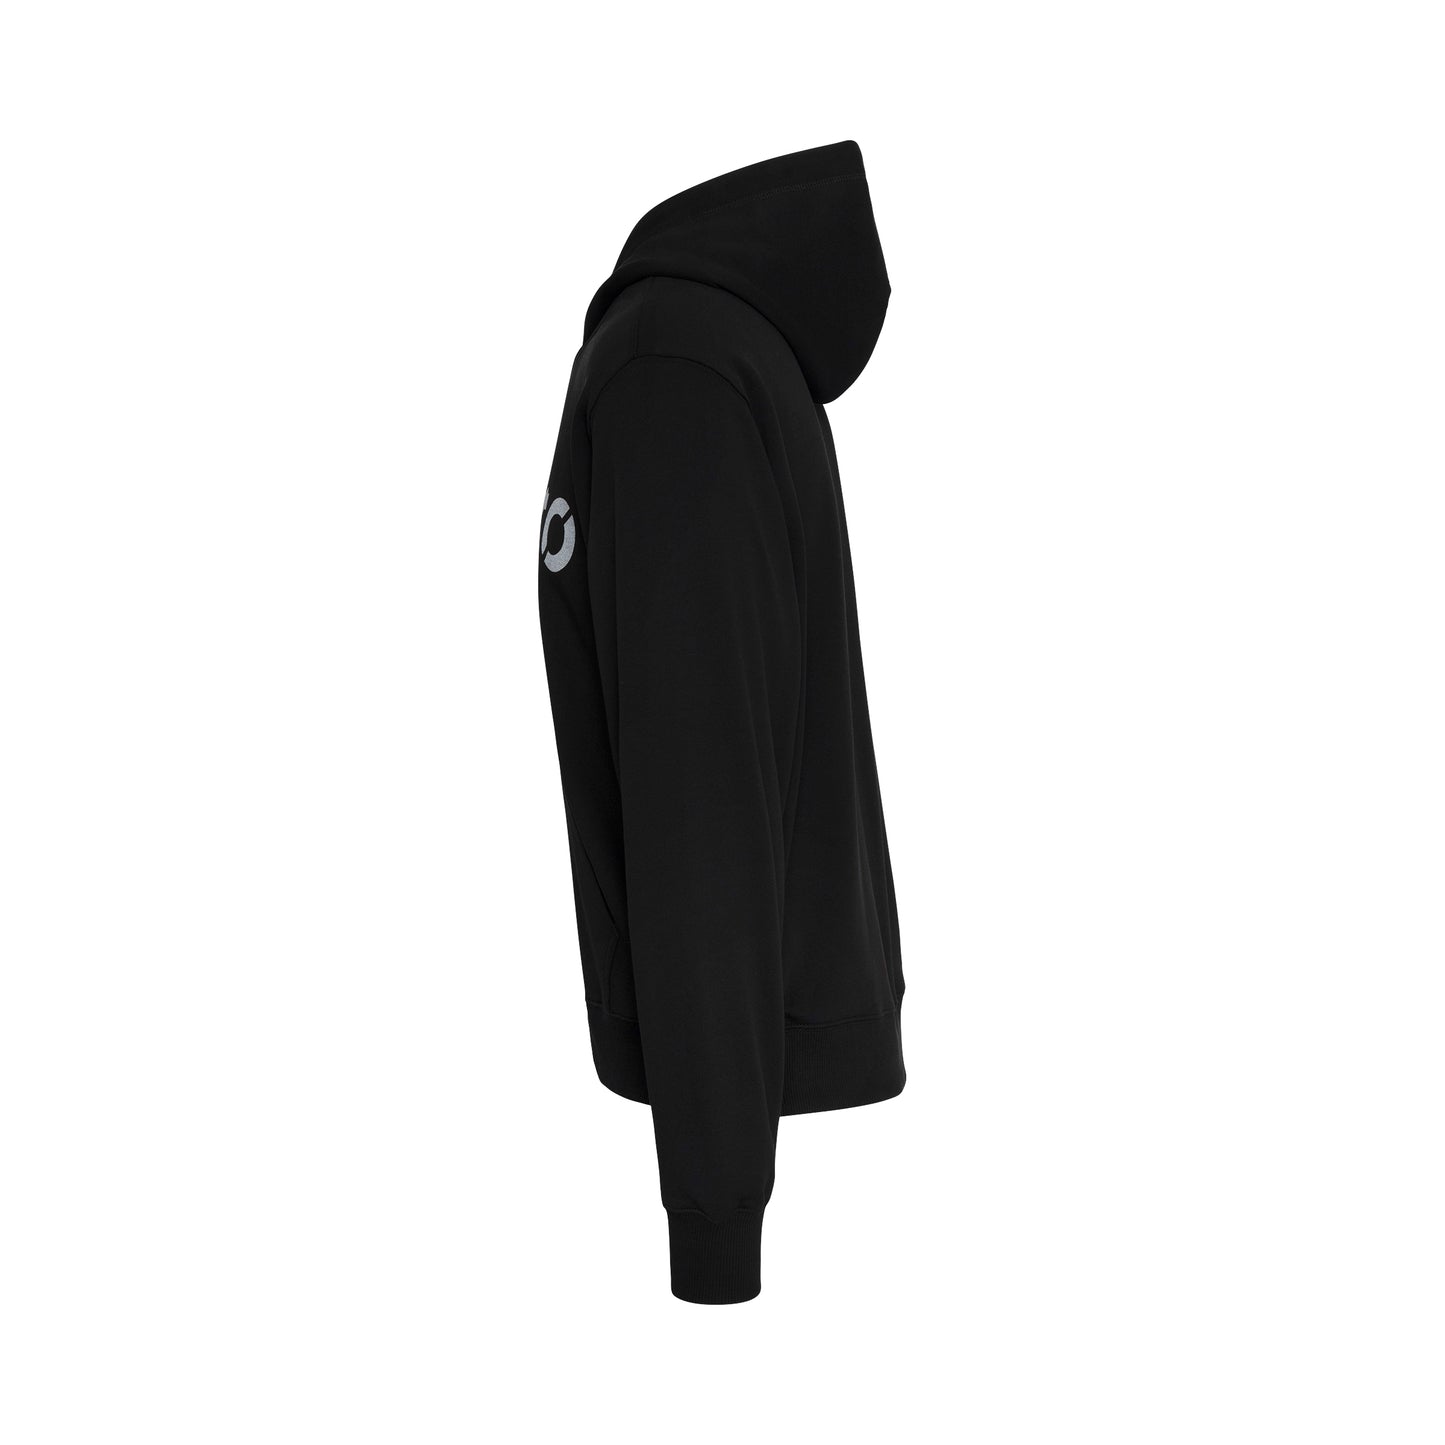 Kenzo Classic Logo Hoodie in Black